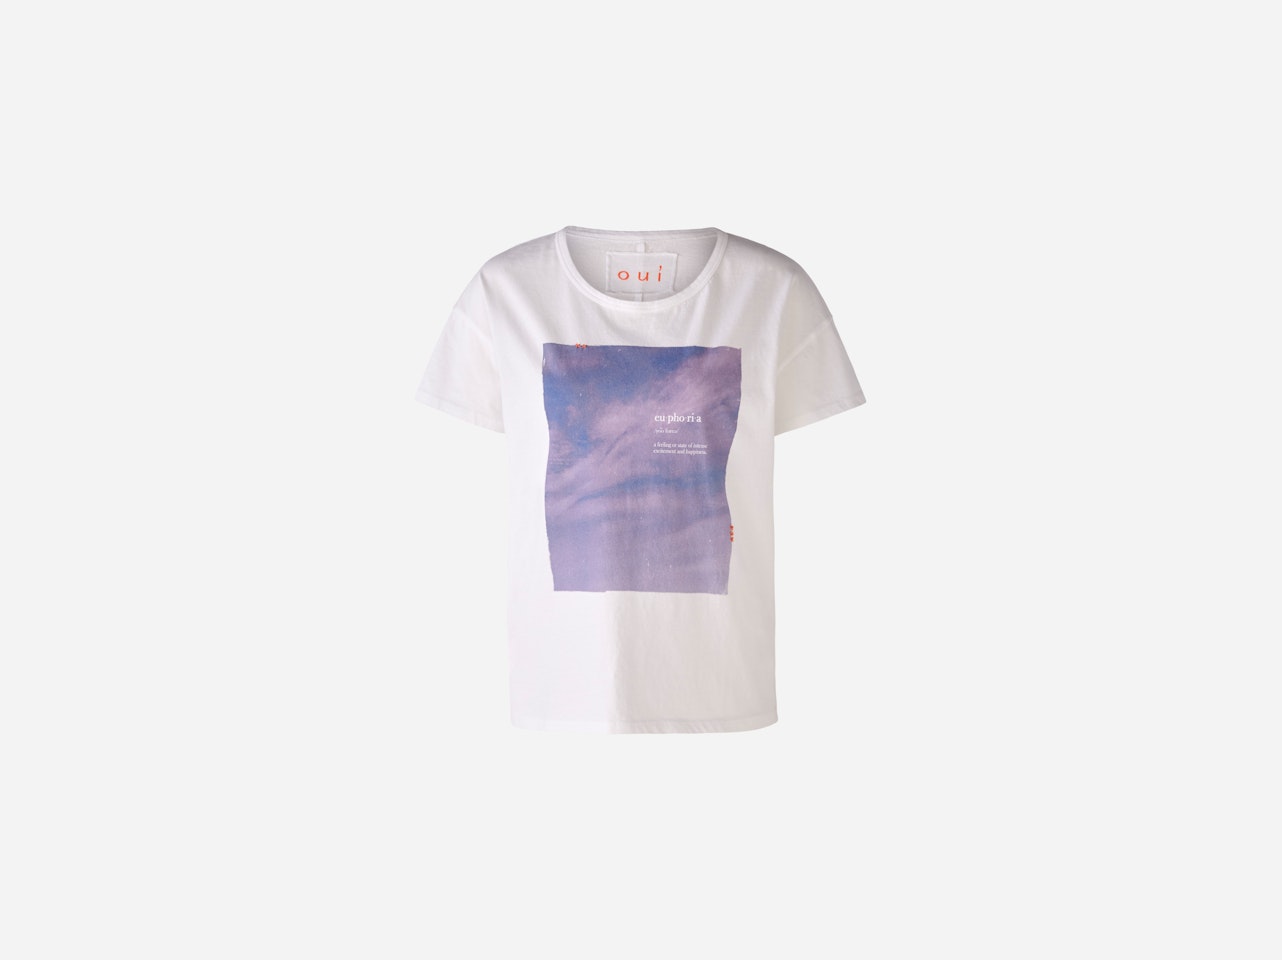 Bild 7 von T-shirt with placed motif in optic white | Oui